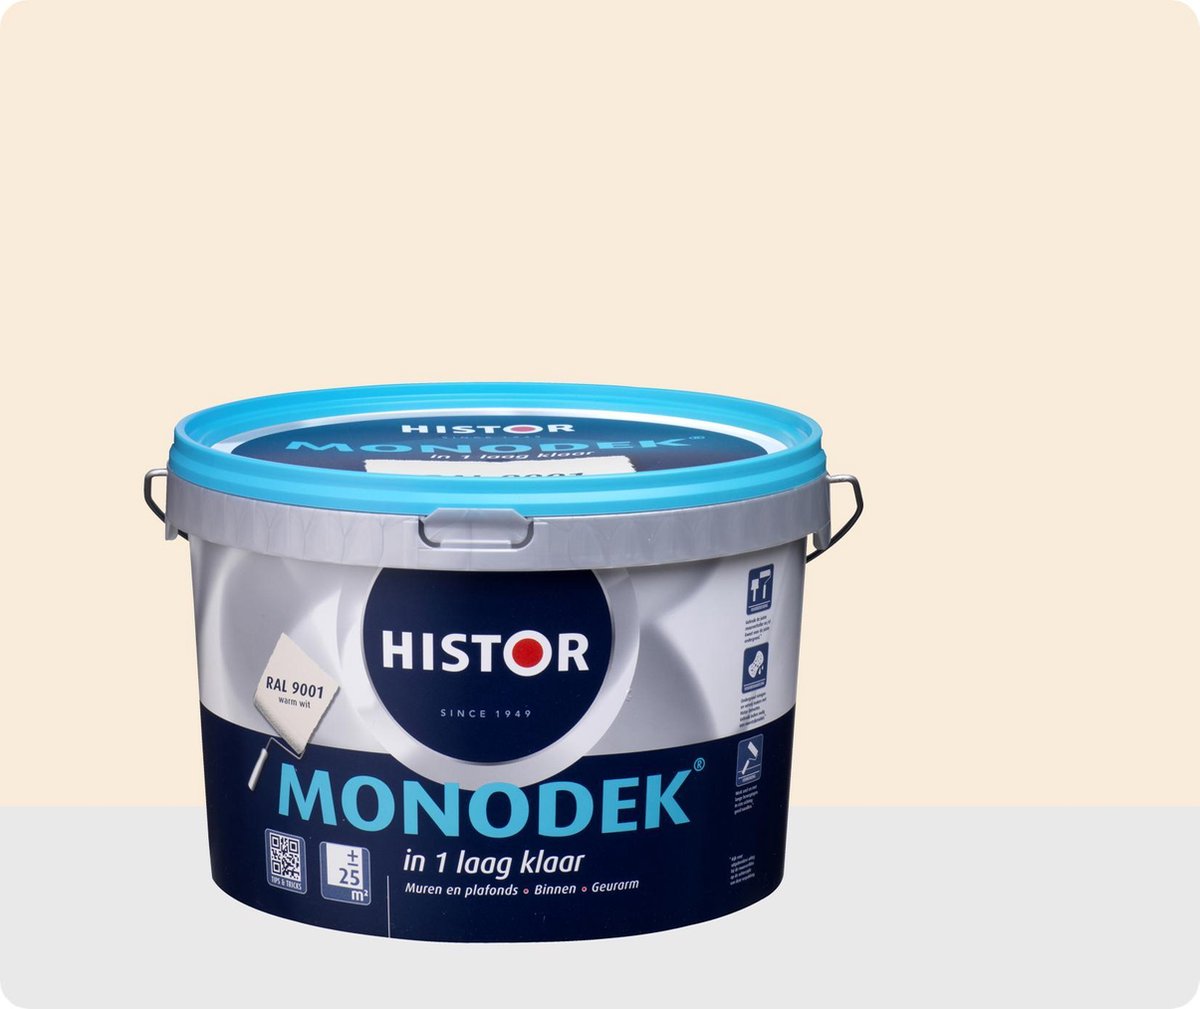 Histor Monodek Muurverf - 2,5 liter - RAL 9001 / Warmwit - Histor